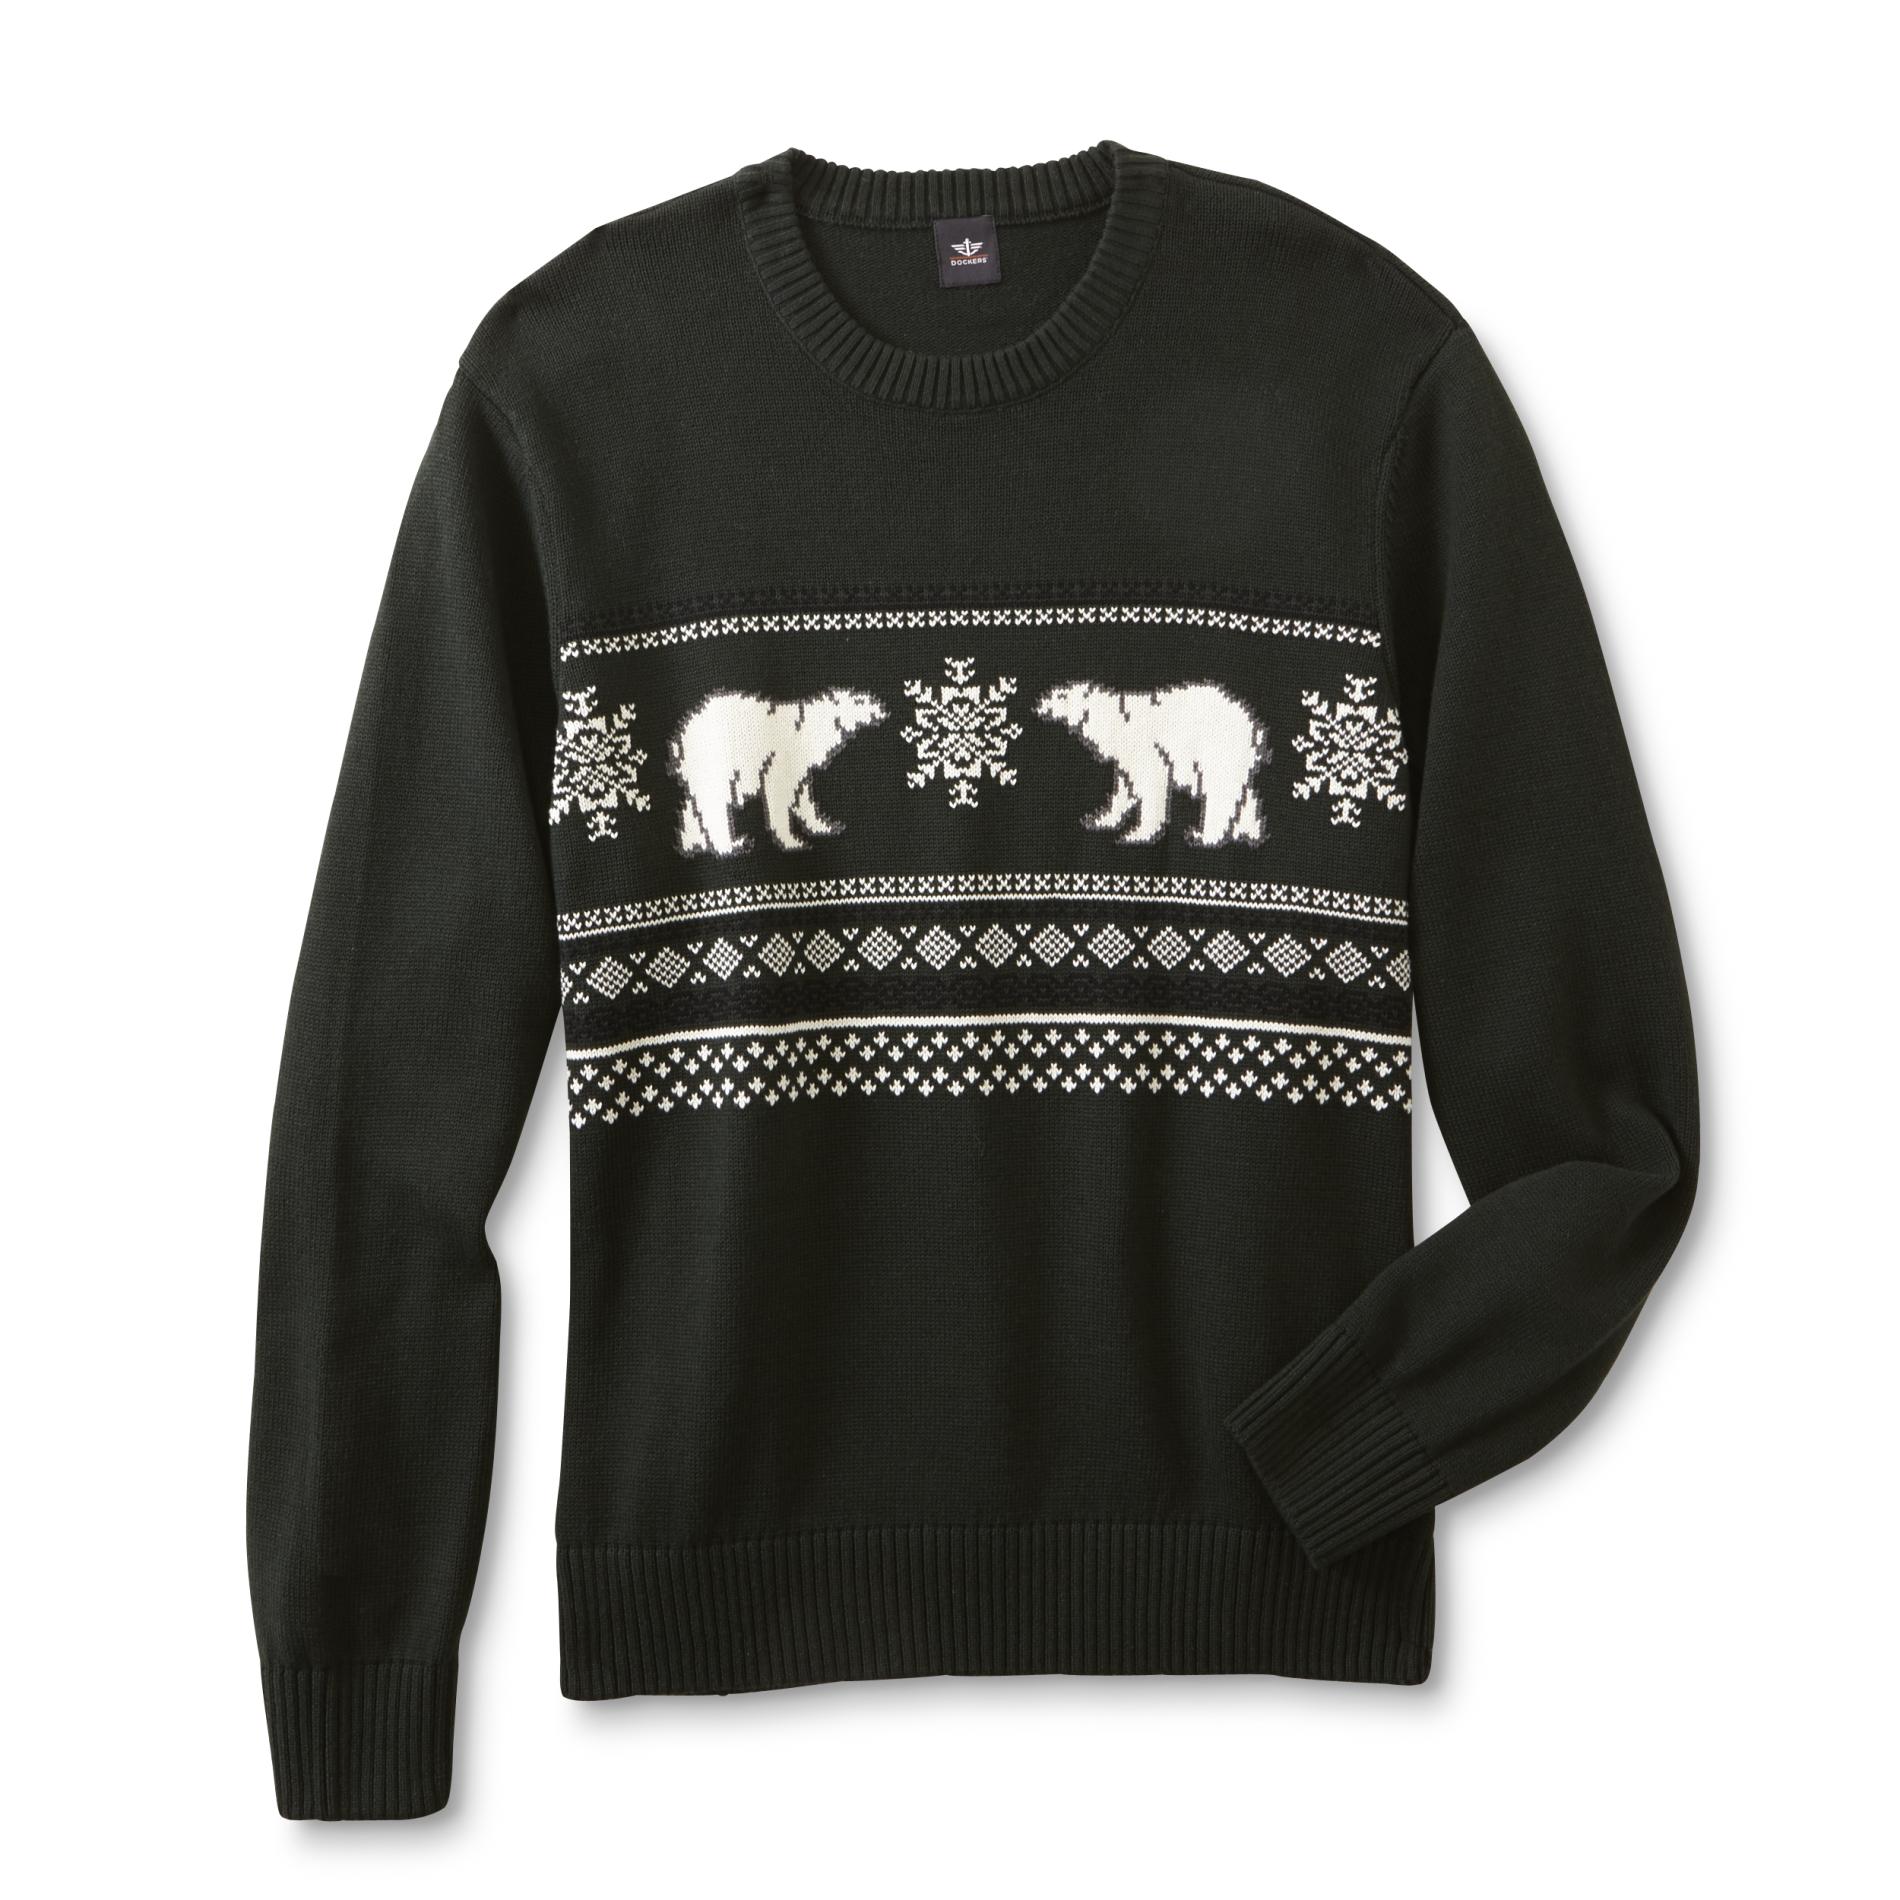 Dockers Men's Christmas Sweater - Polar Bears